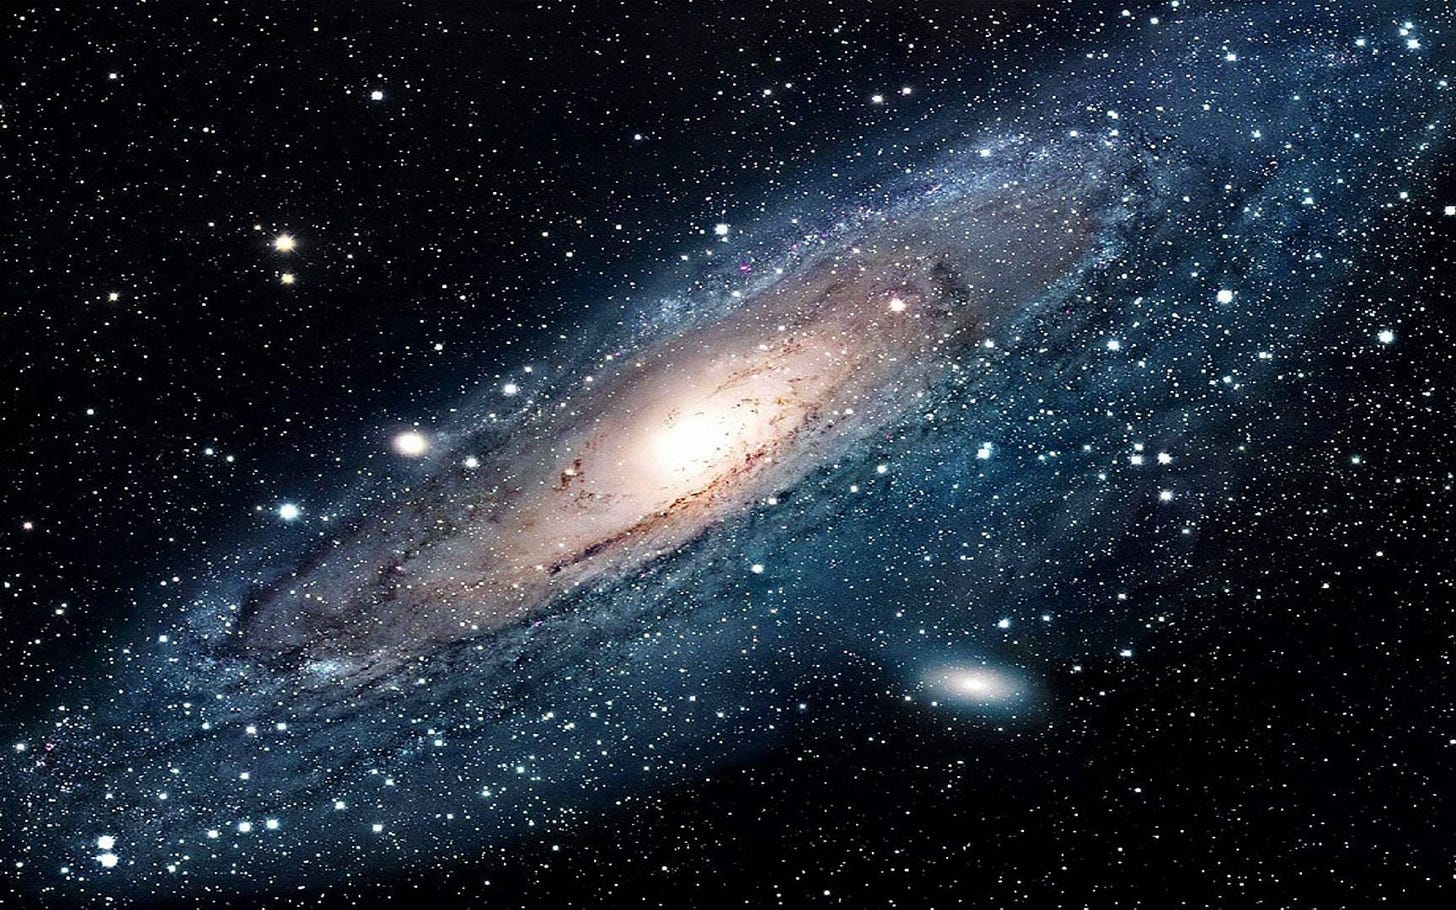 File:Space night sky.jpg - Wikimedia Commons